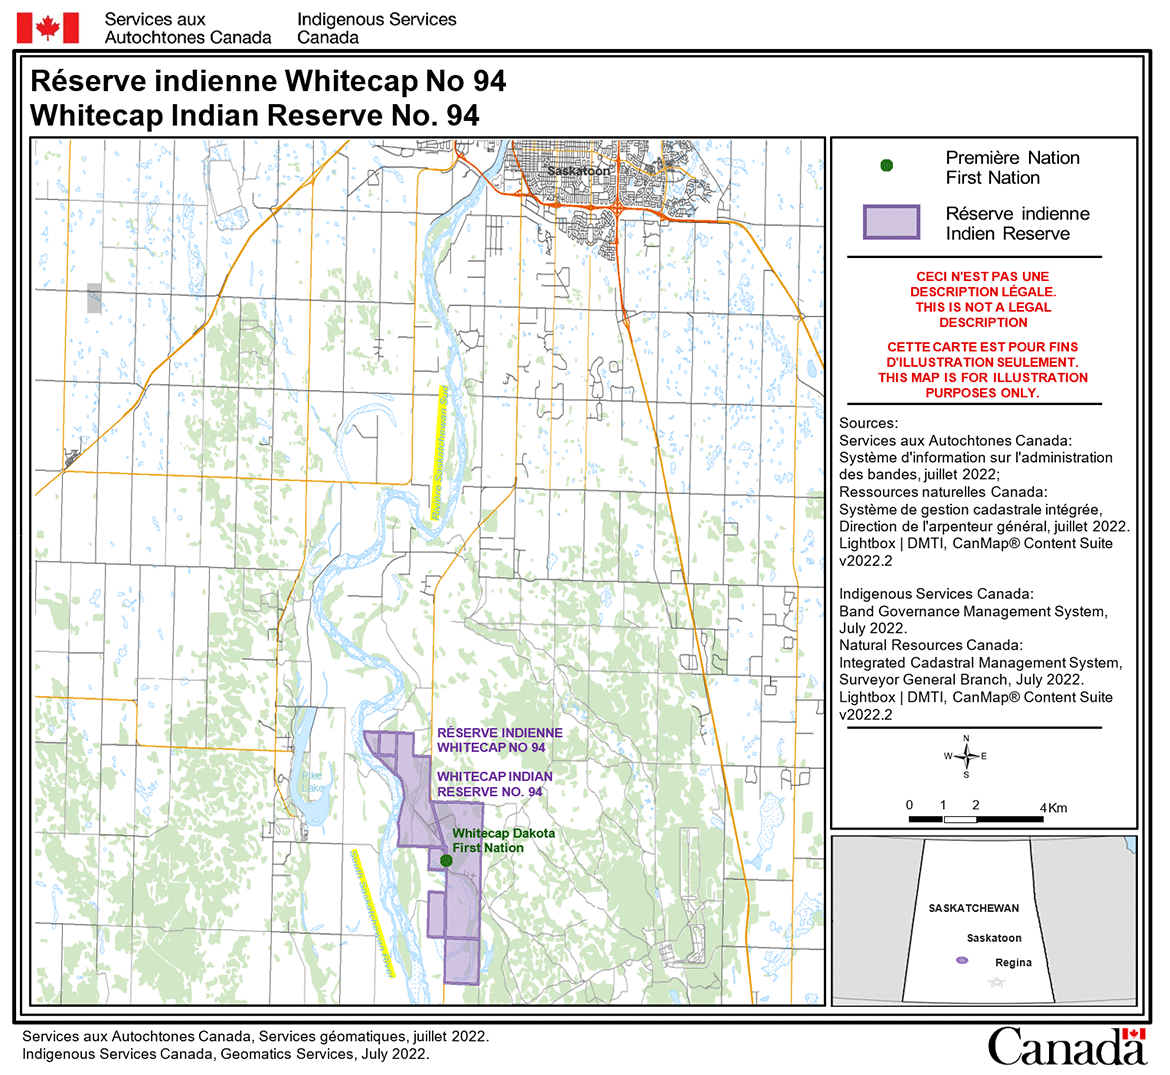 Map showing Whitecap Indian Reserve No. 94